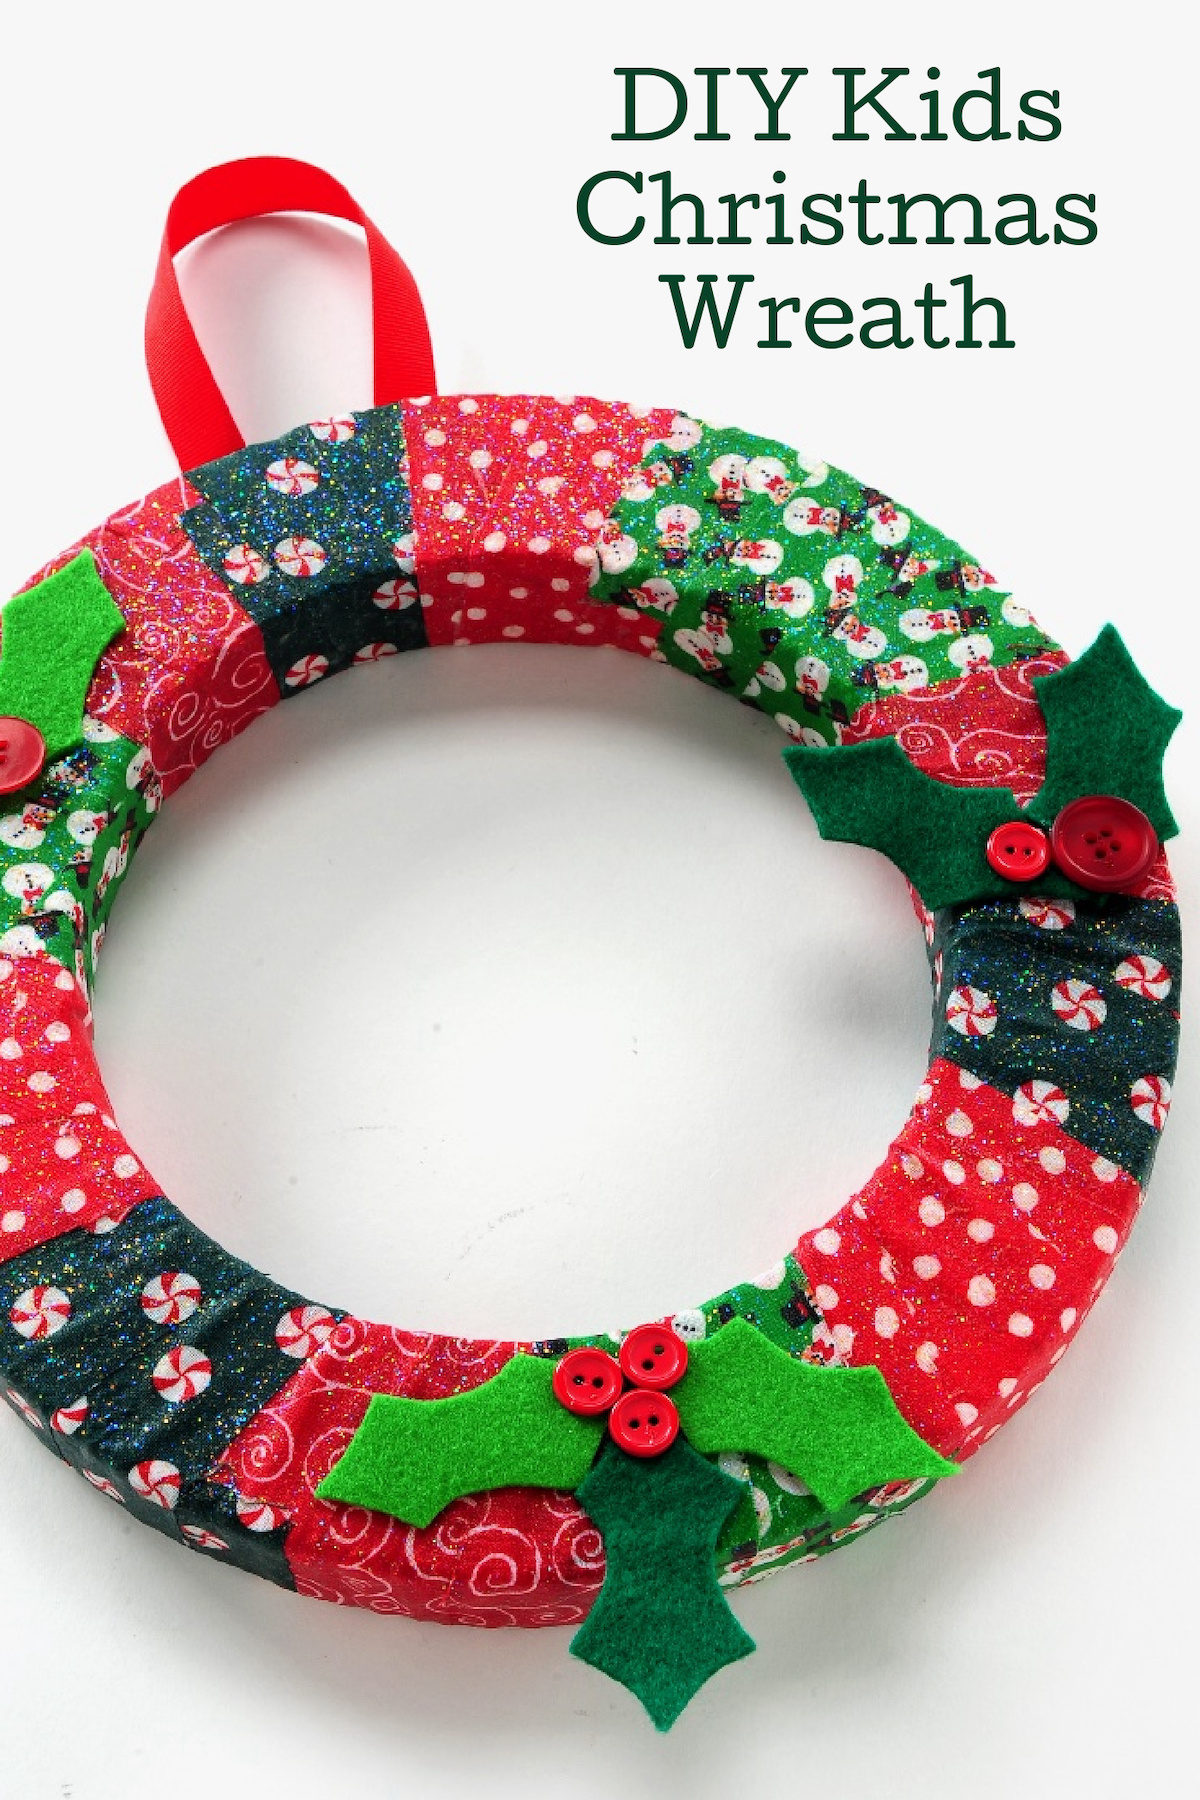 DIY kids Christmas wreath